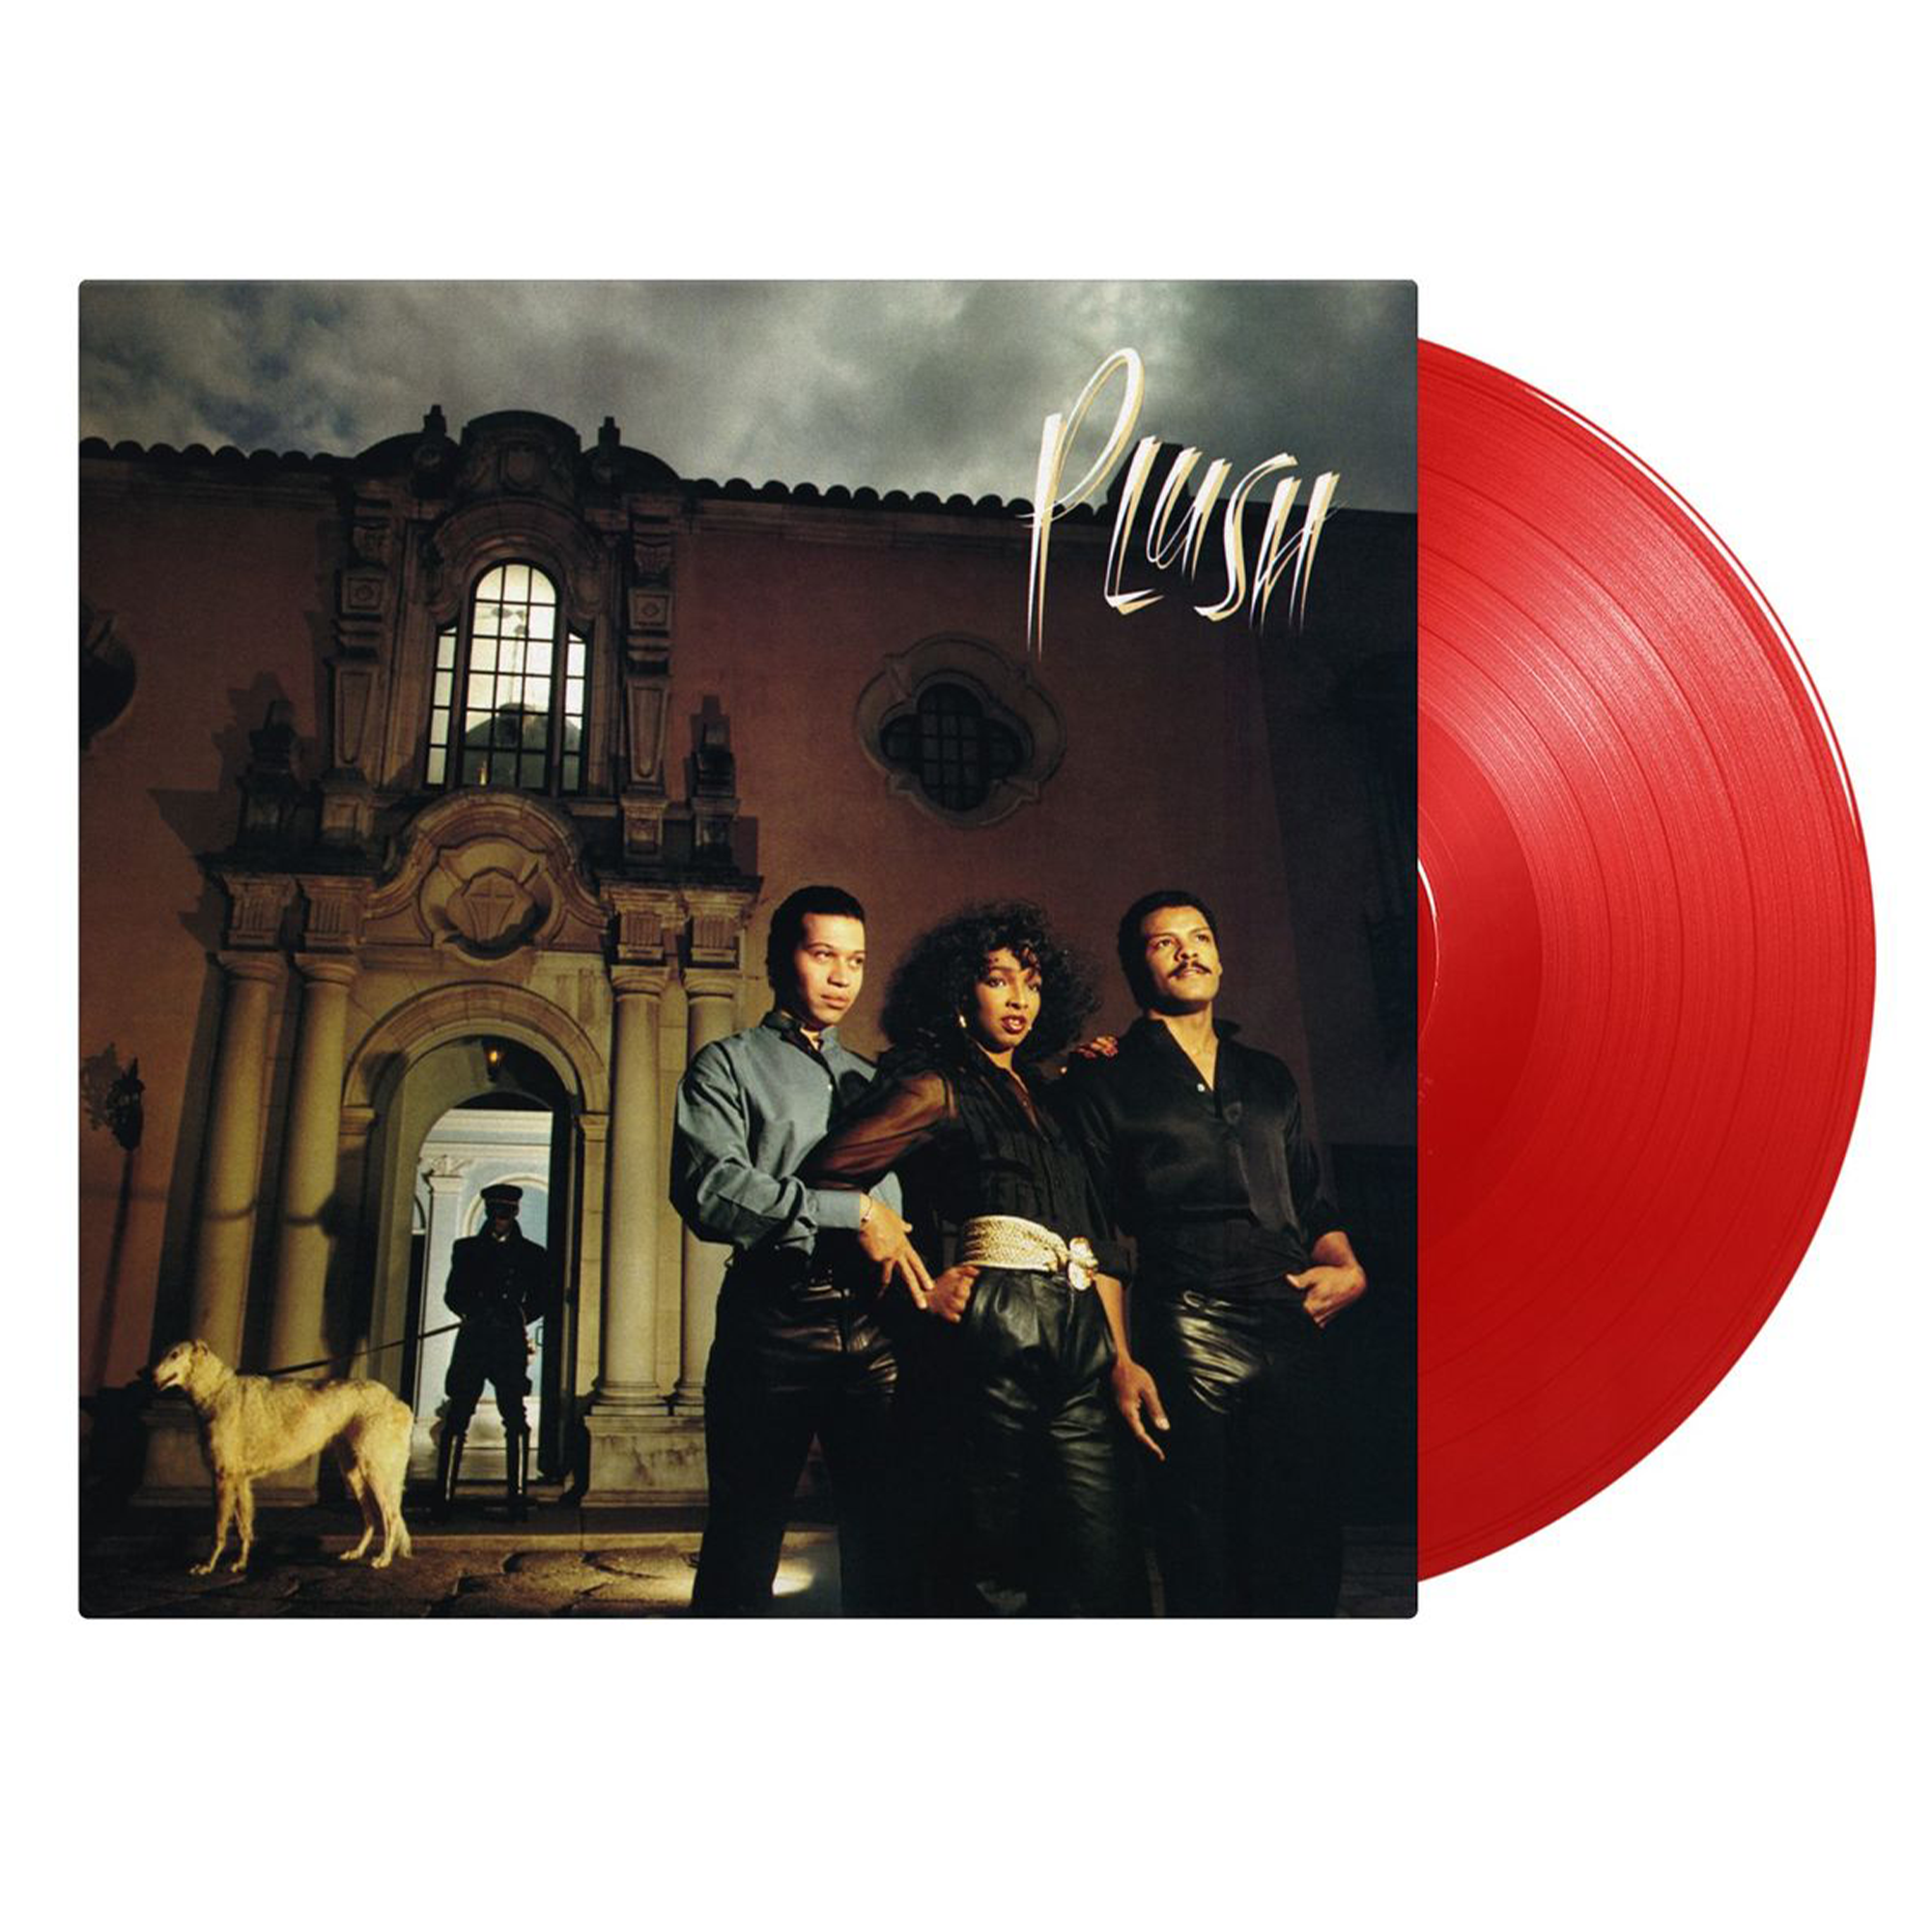 Plush - Plush: Limited Red Vinyl LP